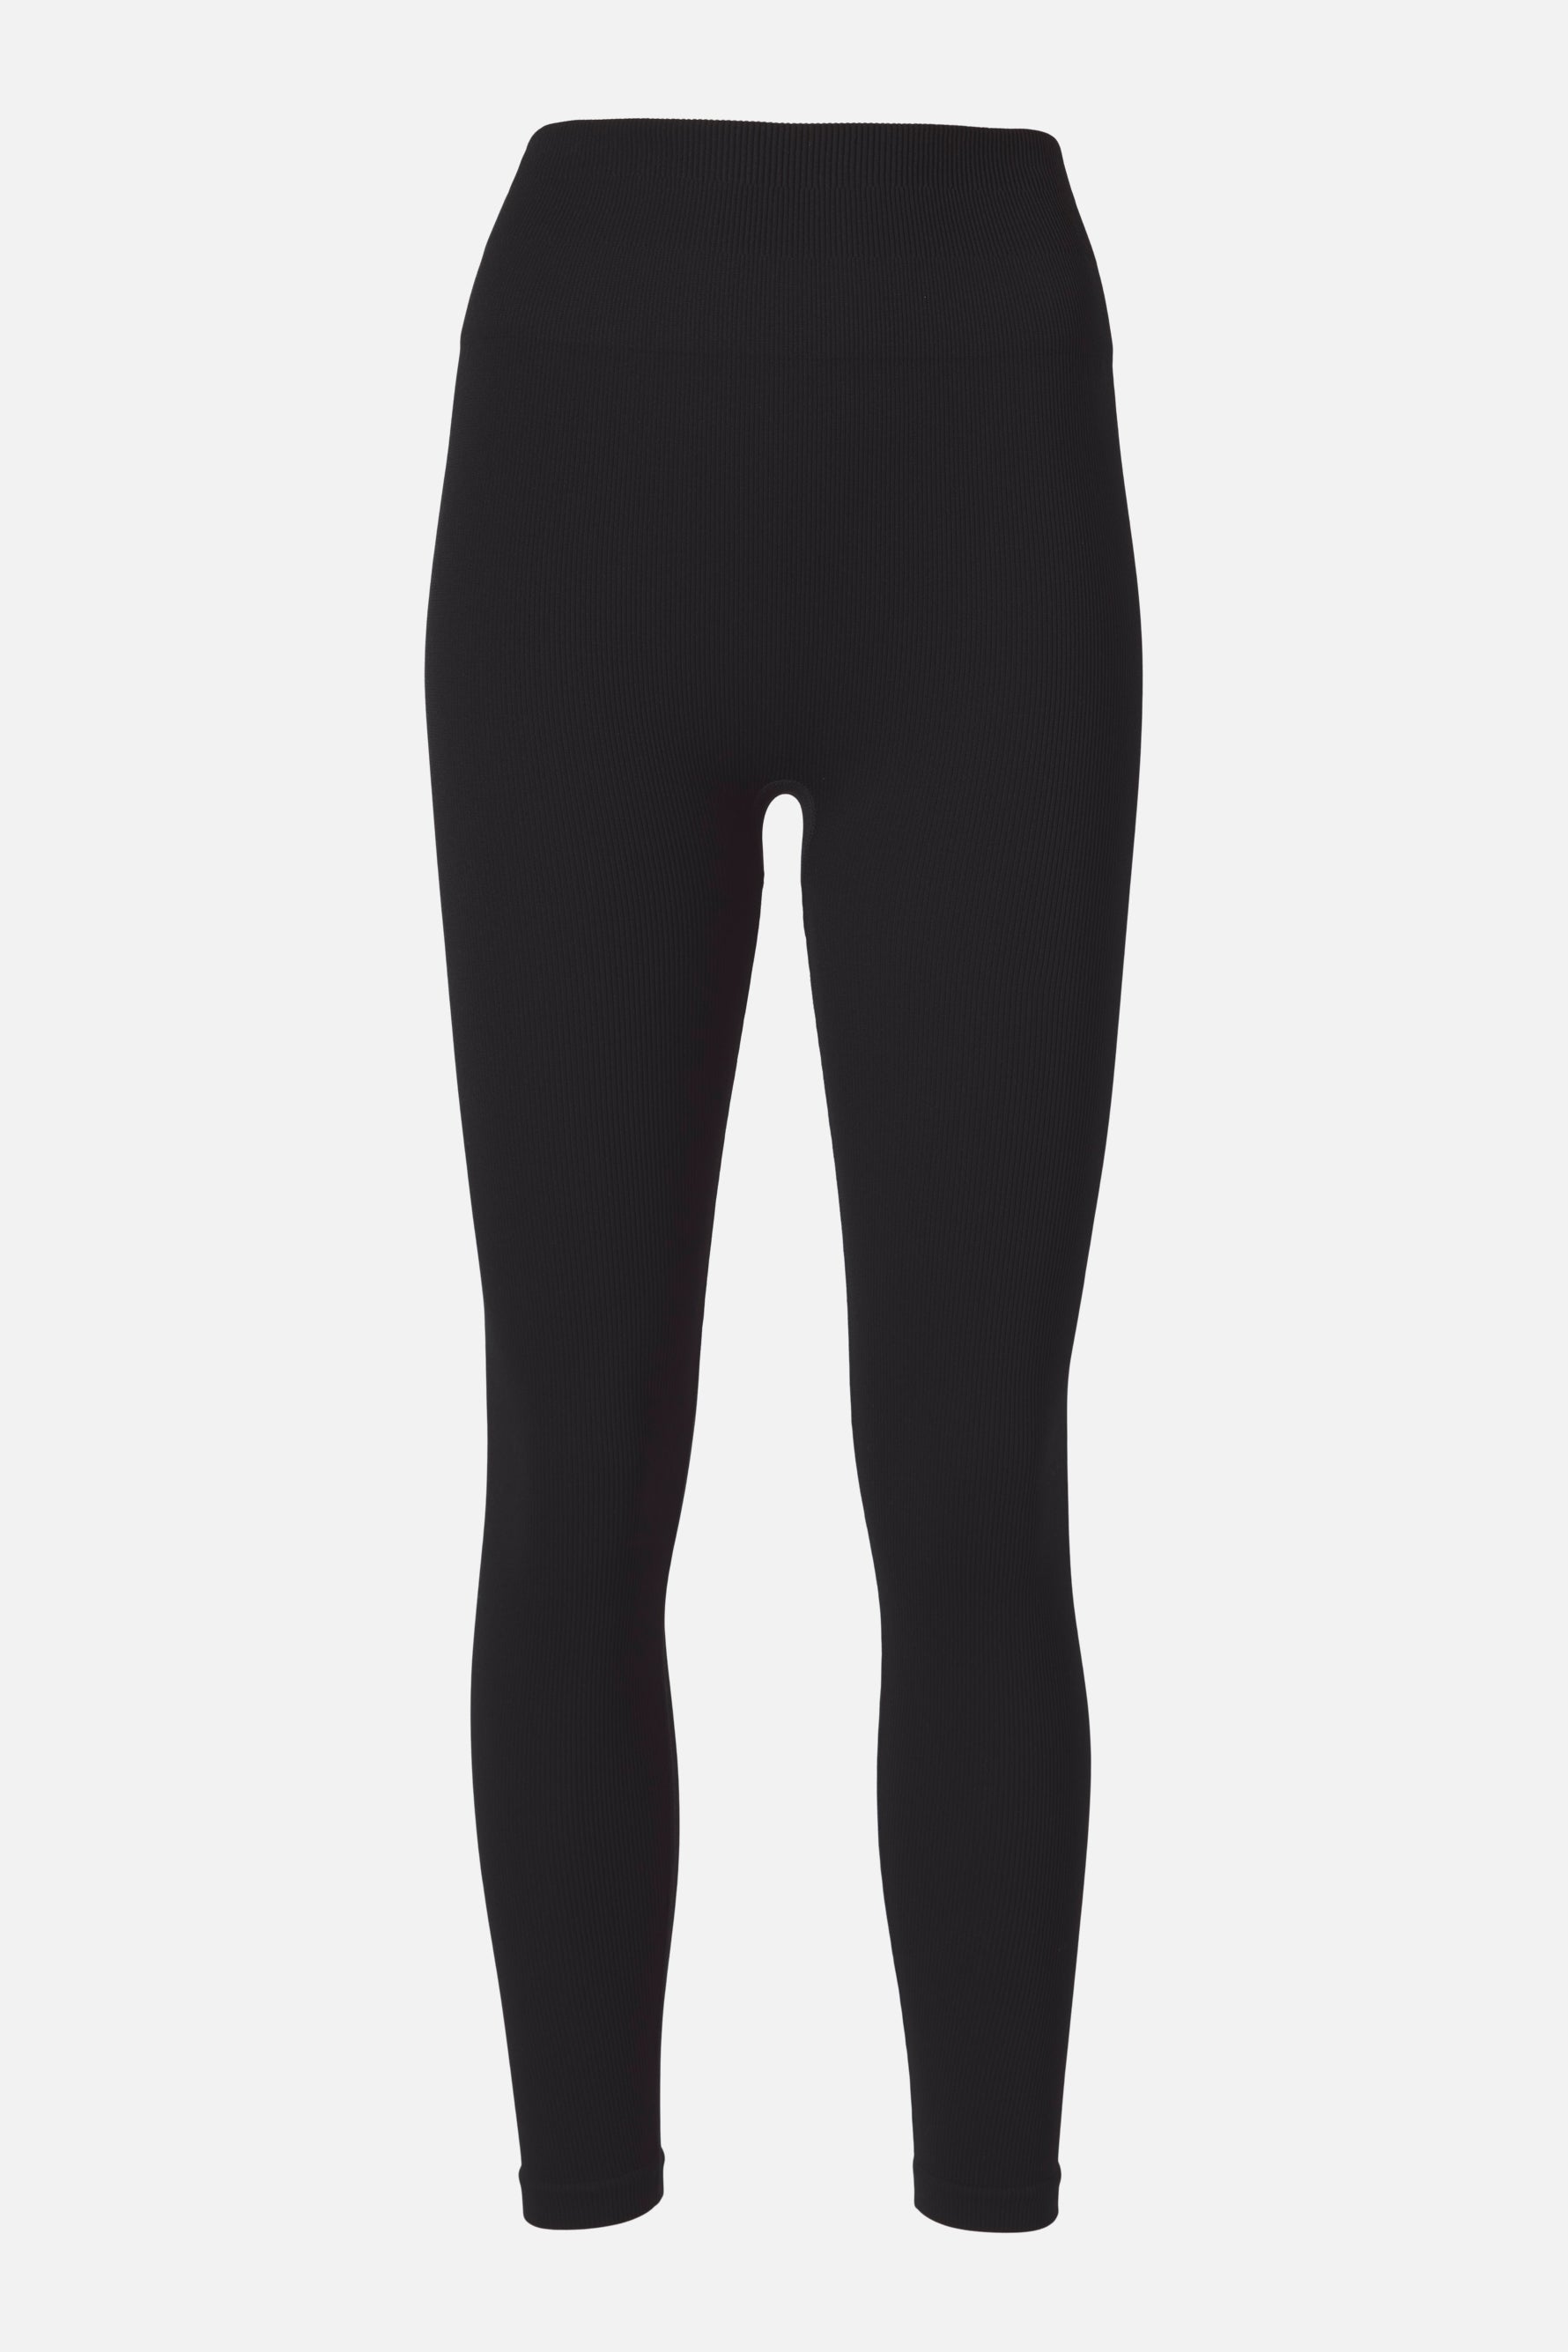 Vertigo Paris black cotton leggings small - $59 New With Tags - From Sari